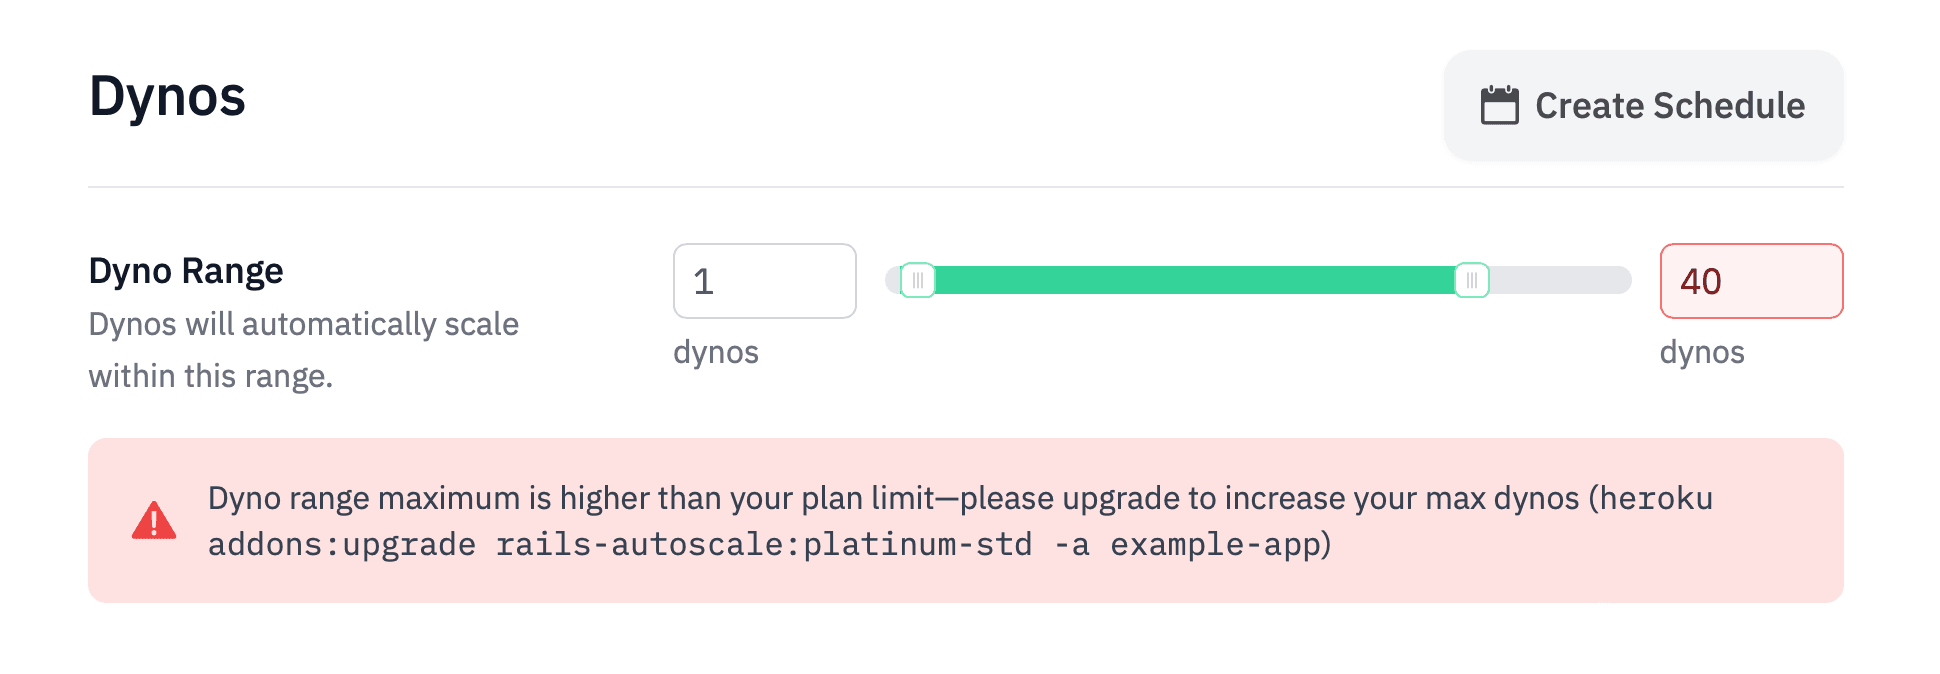 Screenshot: Validation error when setting dyno range beyond the current plan limit